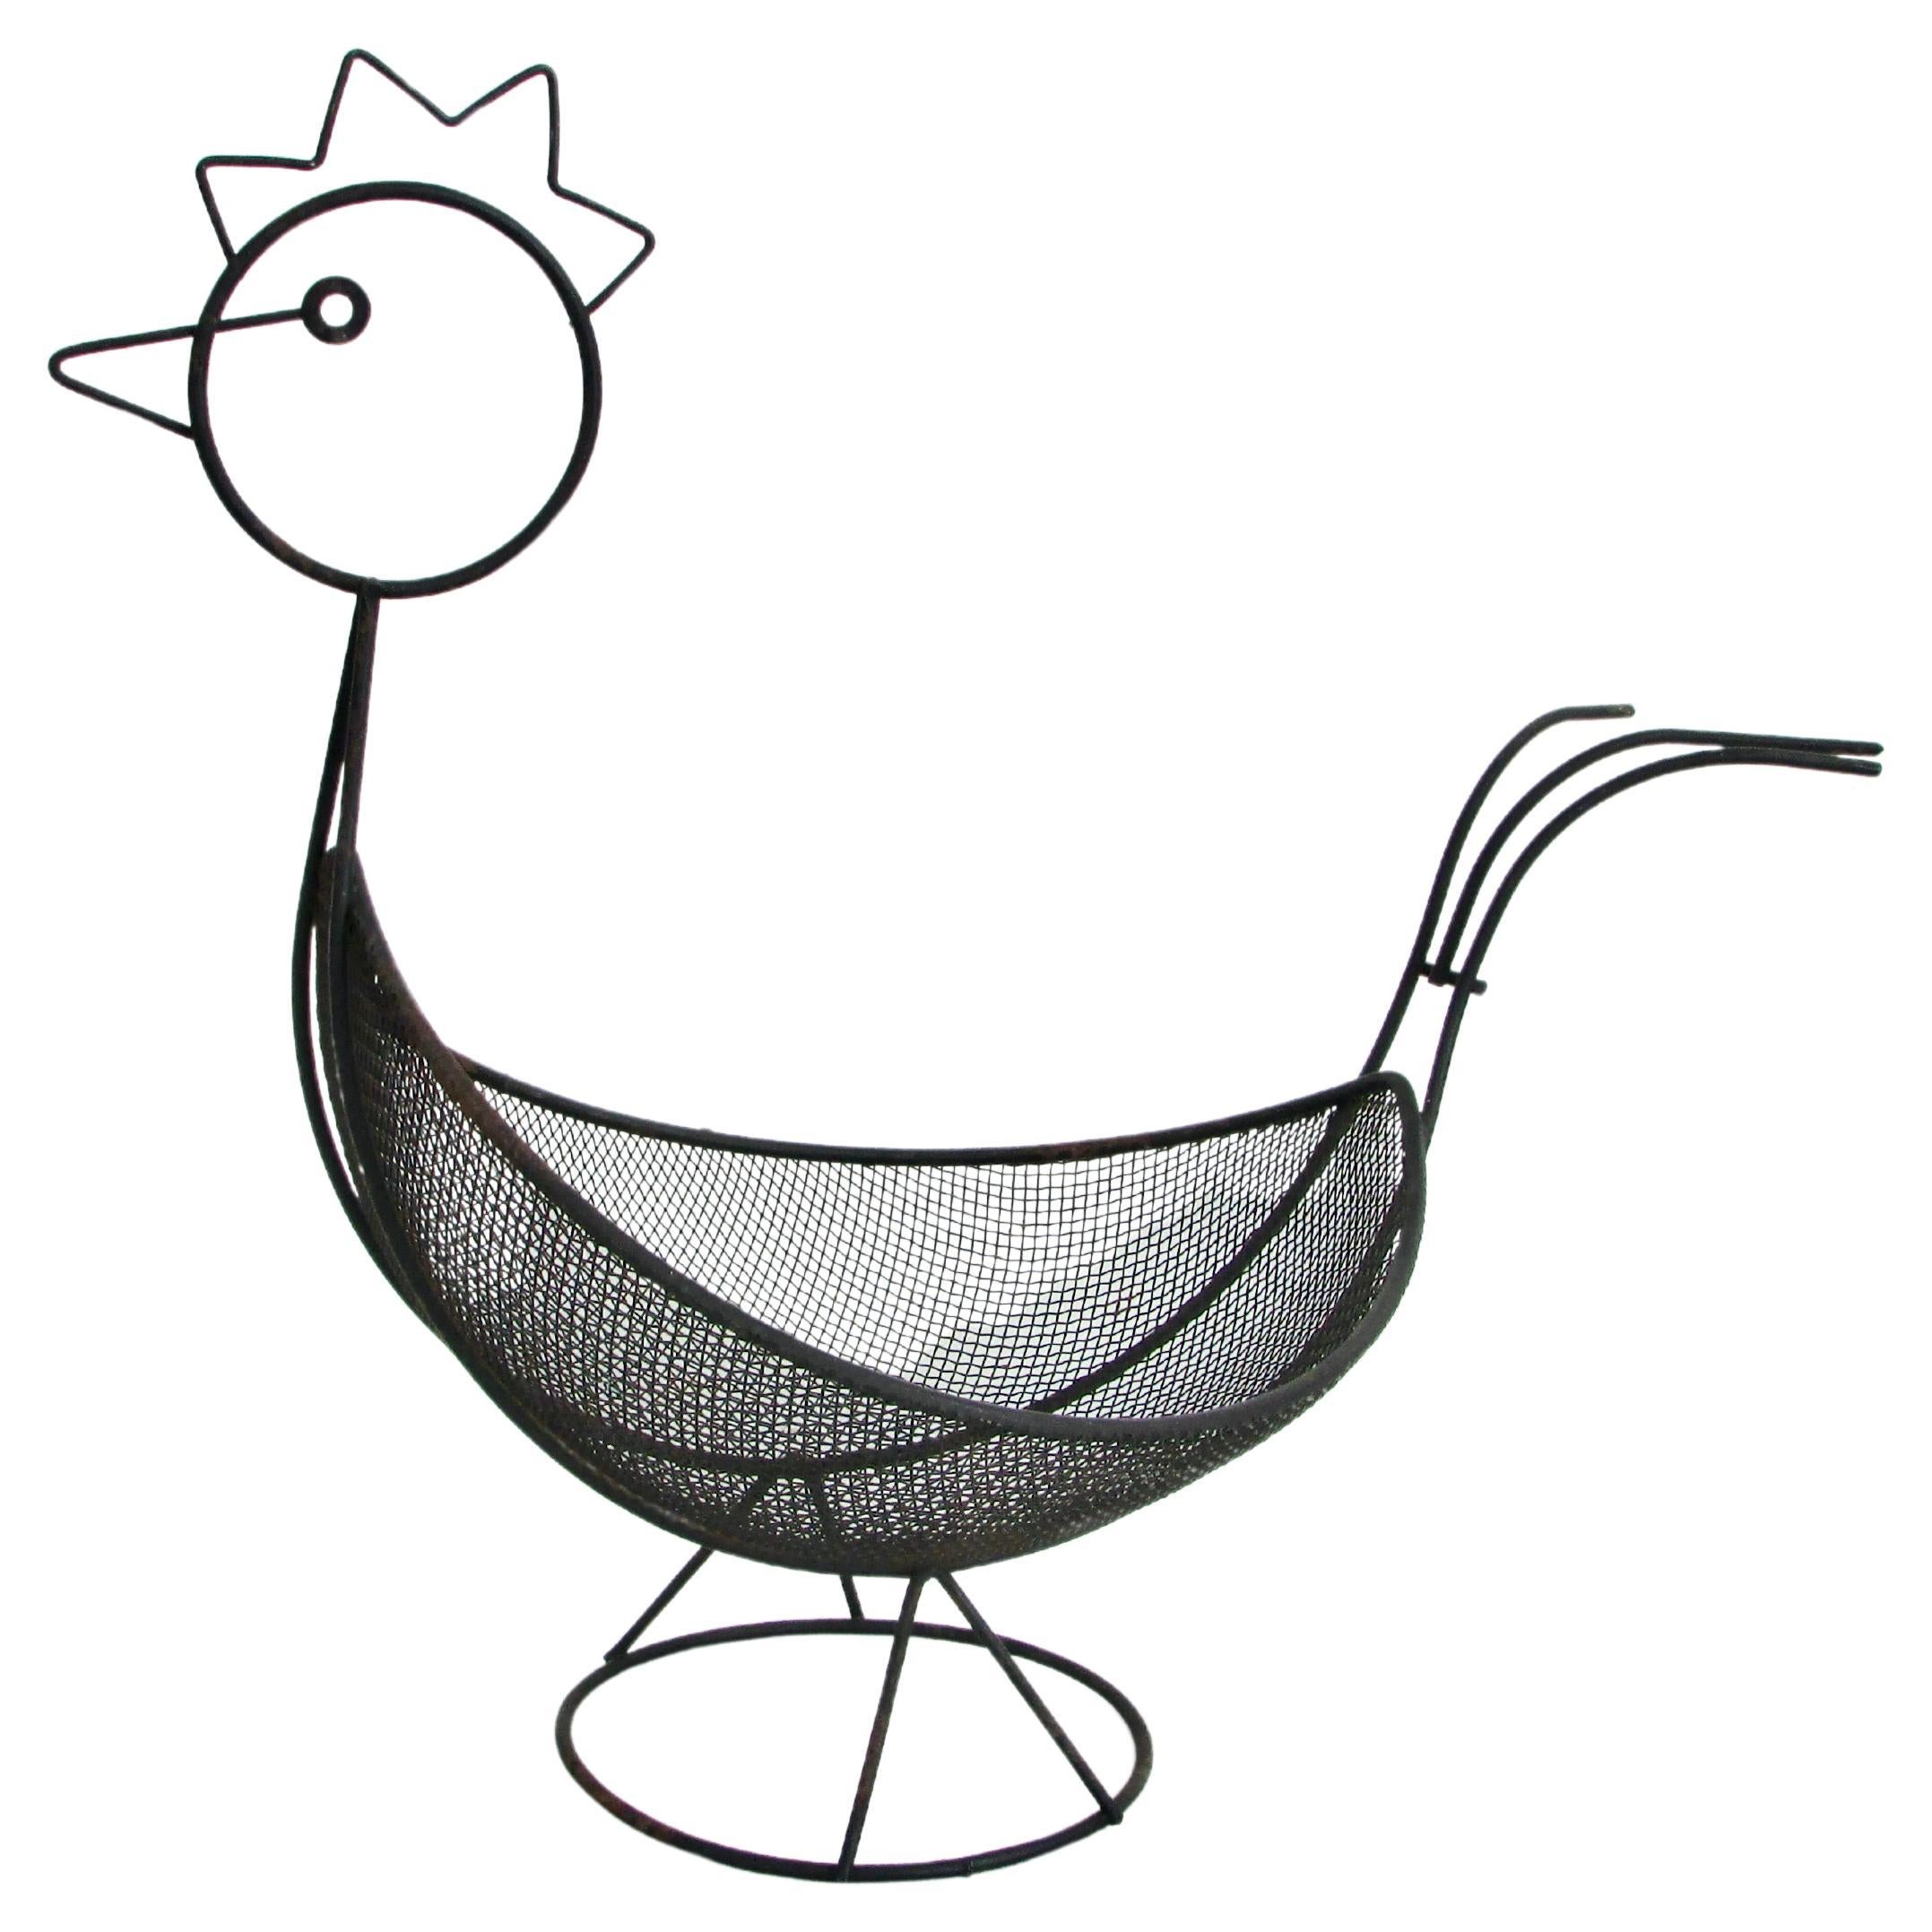 Weinberg style abstract chicken form black wrought wirework basket